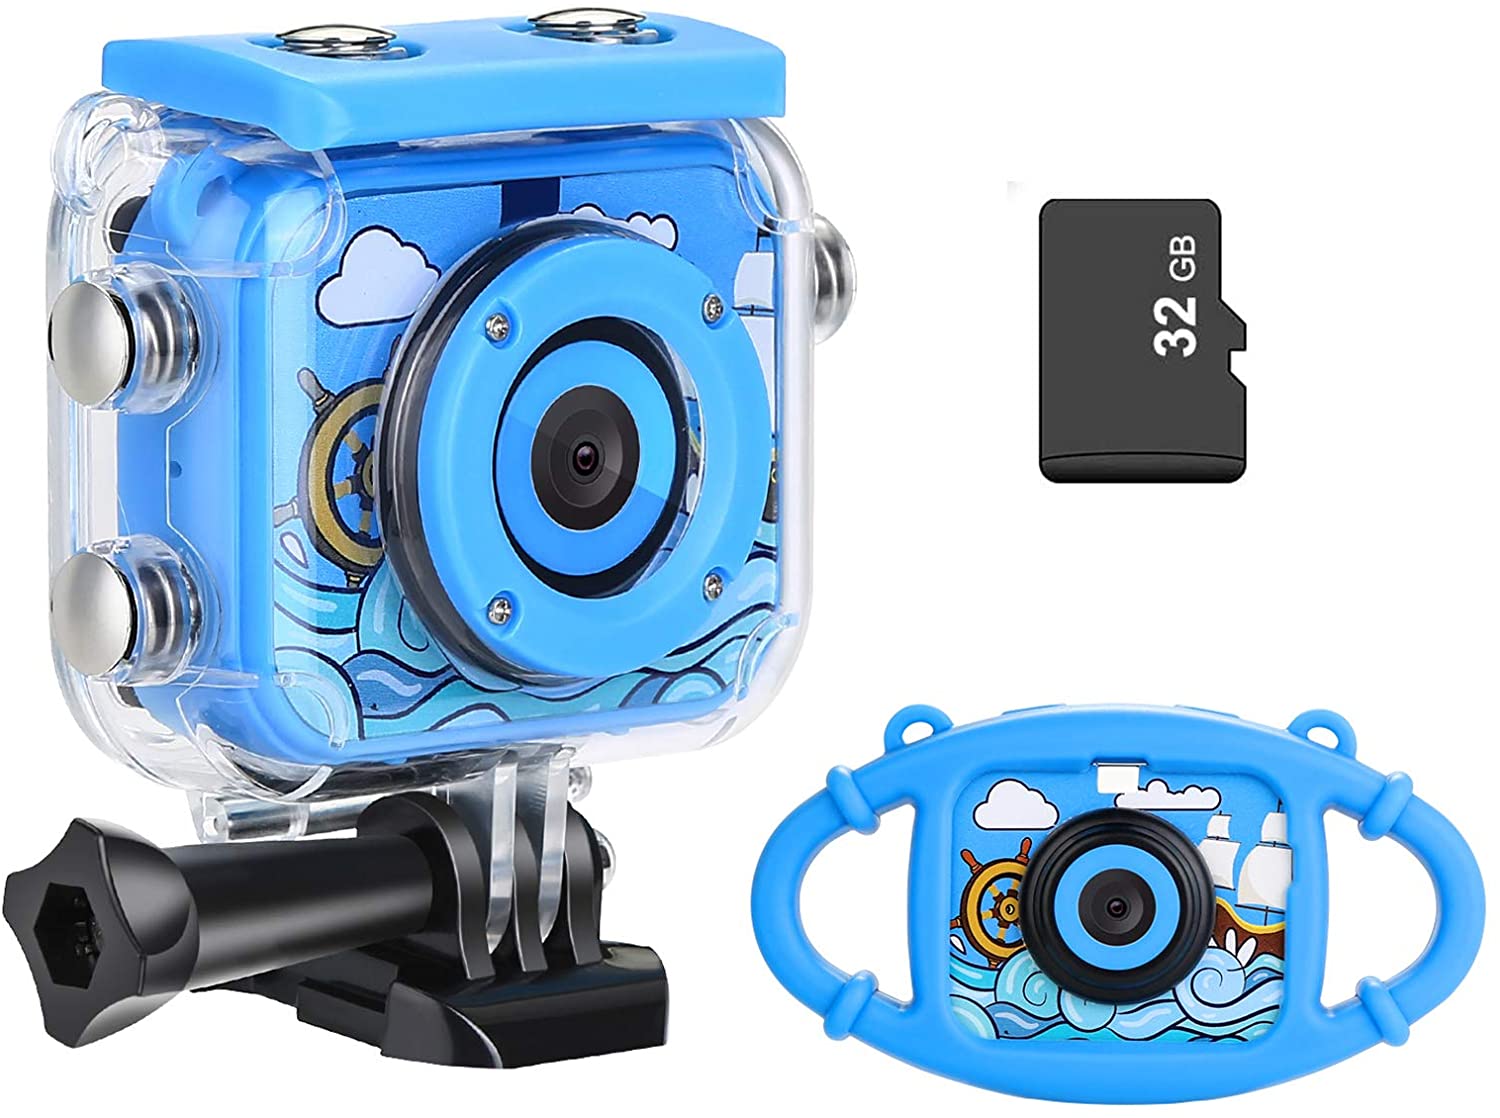 Kids Camera, Underwater Waterproof Digital Camera Kids Gifts for Boys Girls Age 3-13.